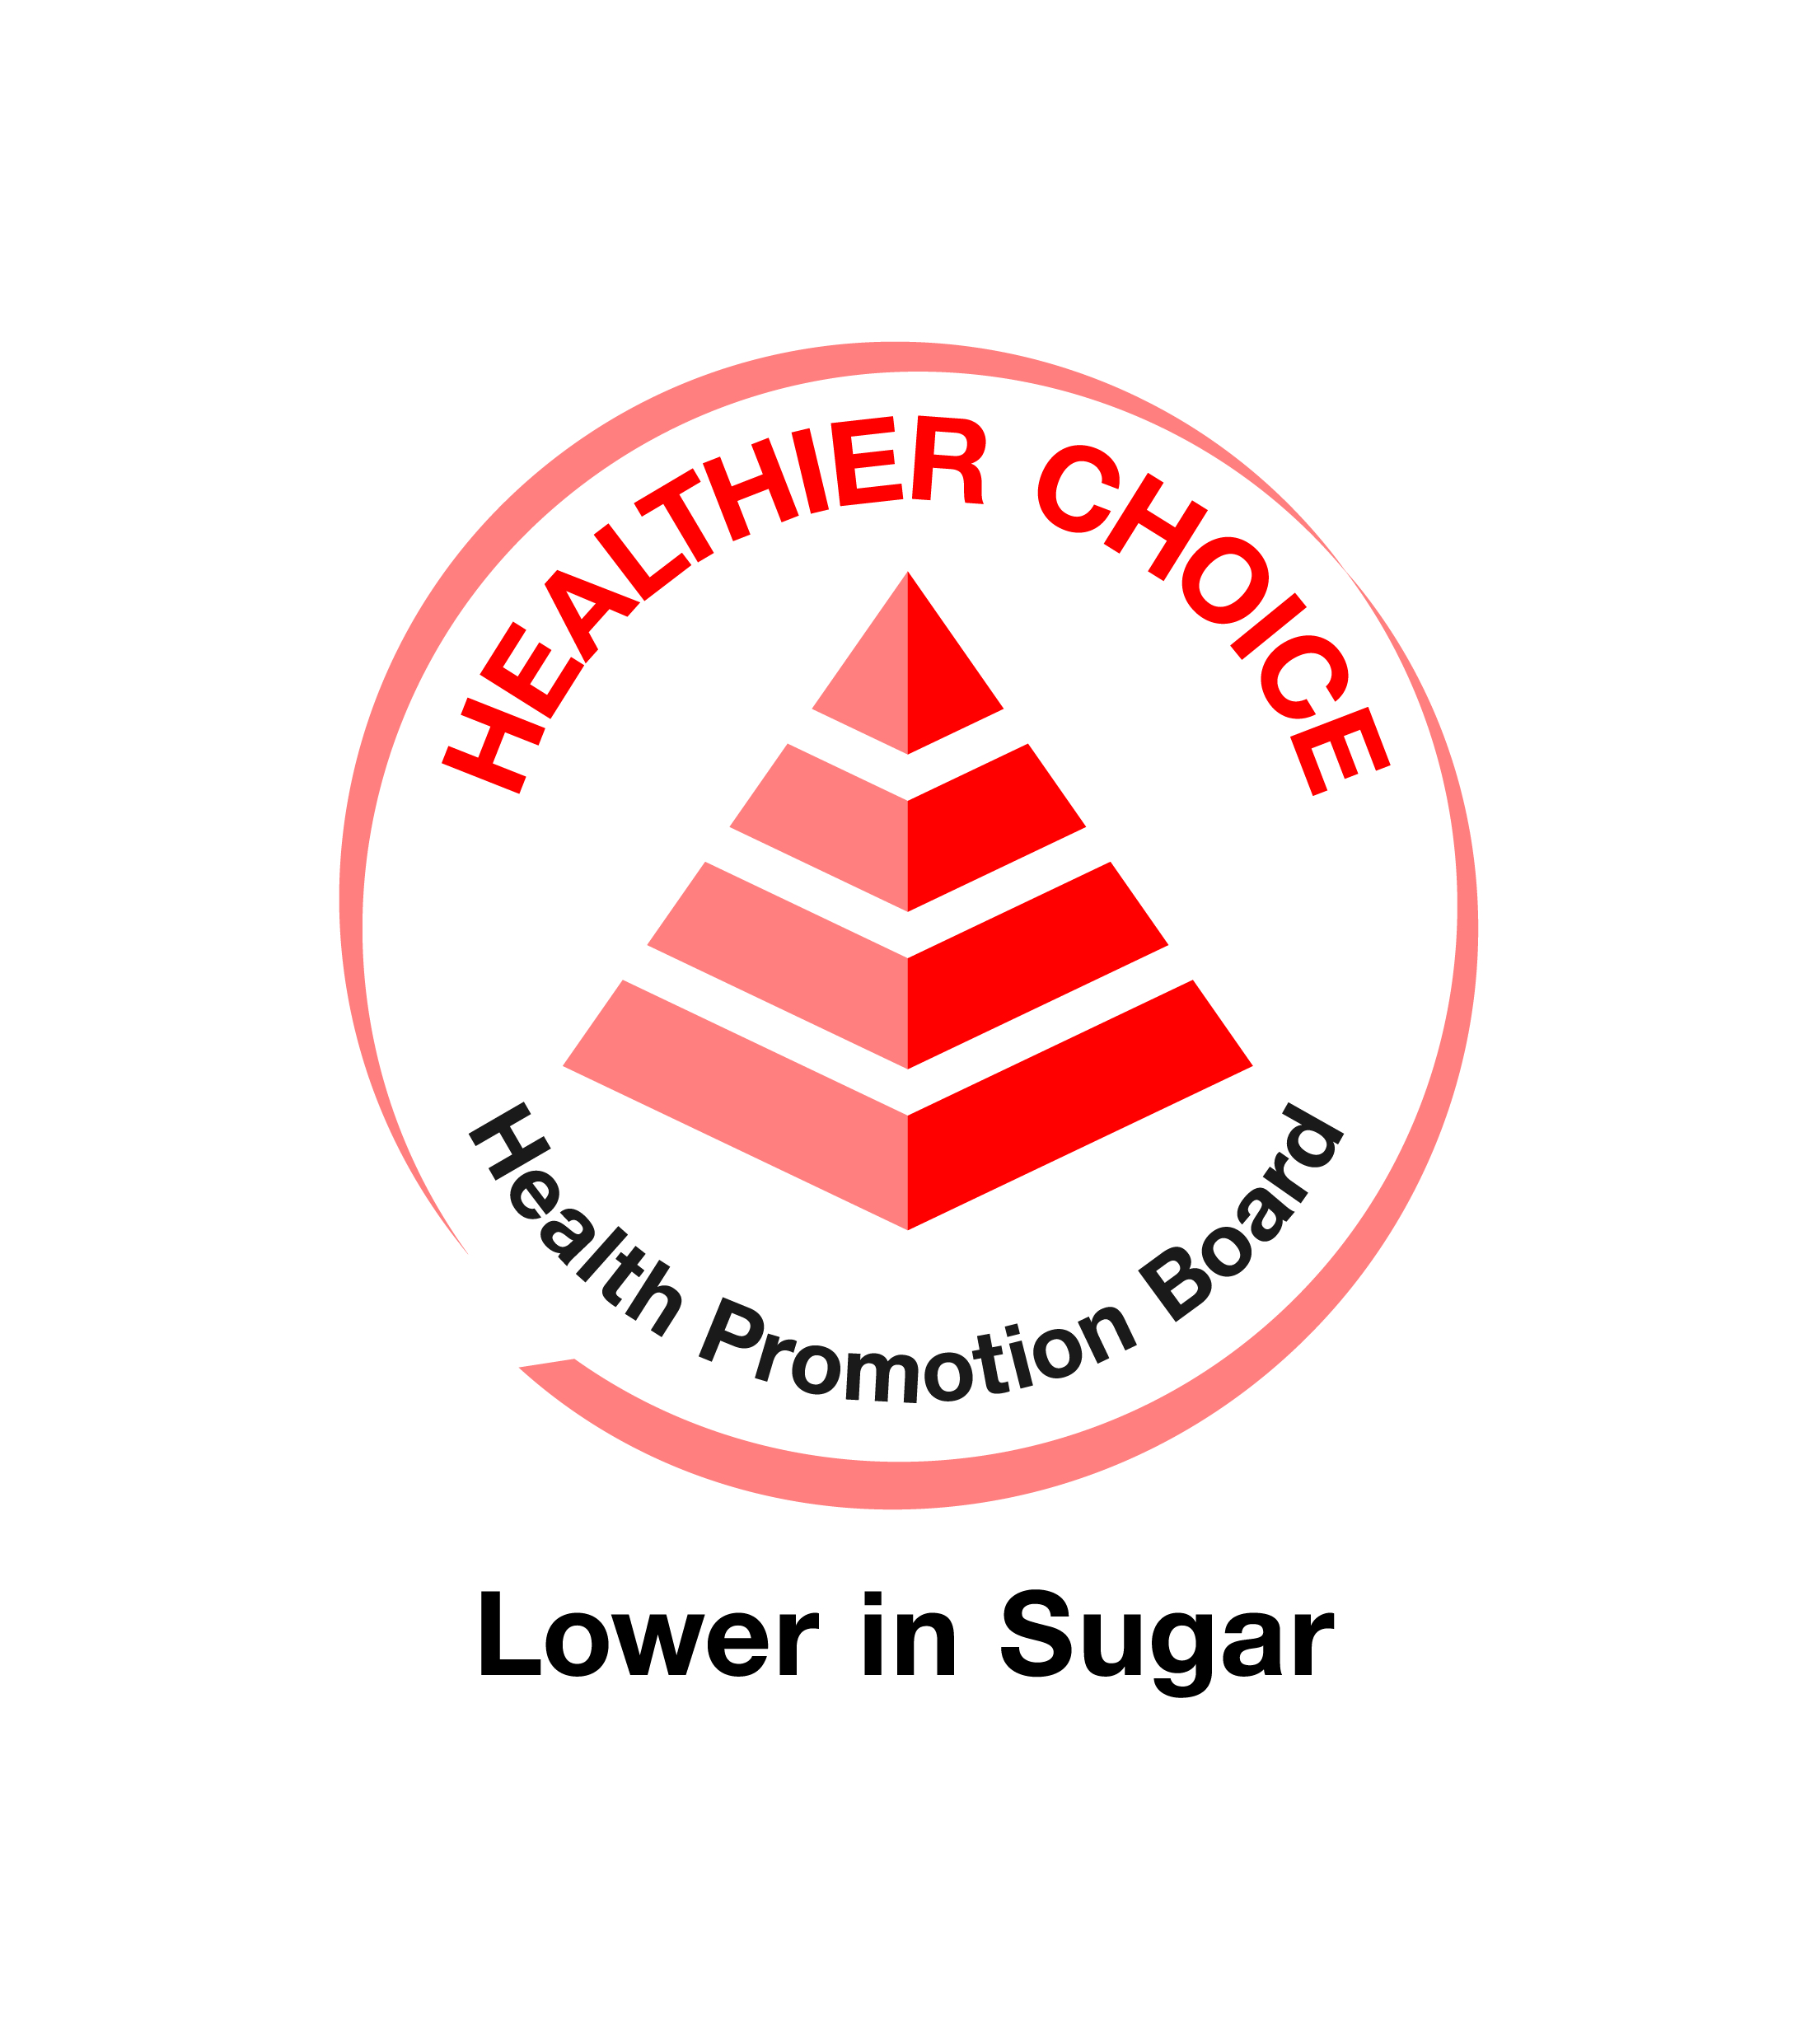 healthier choice symbols